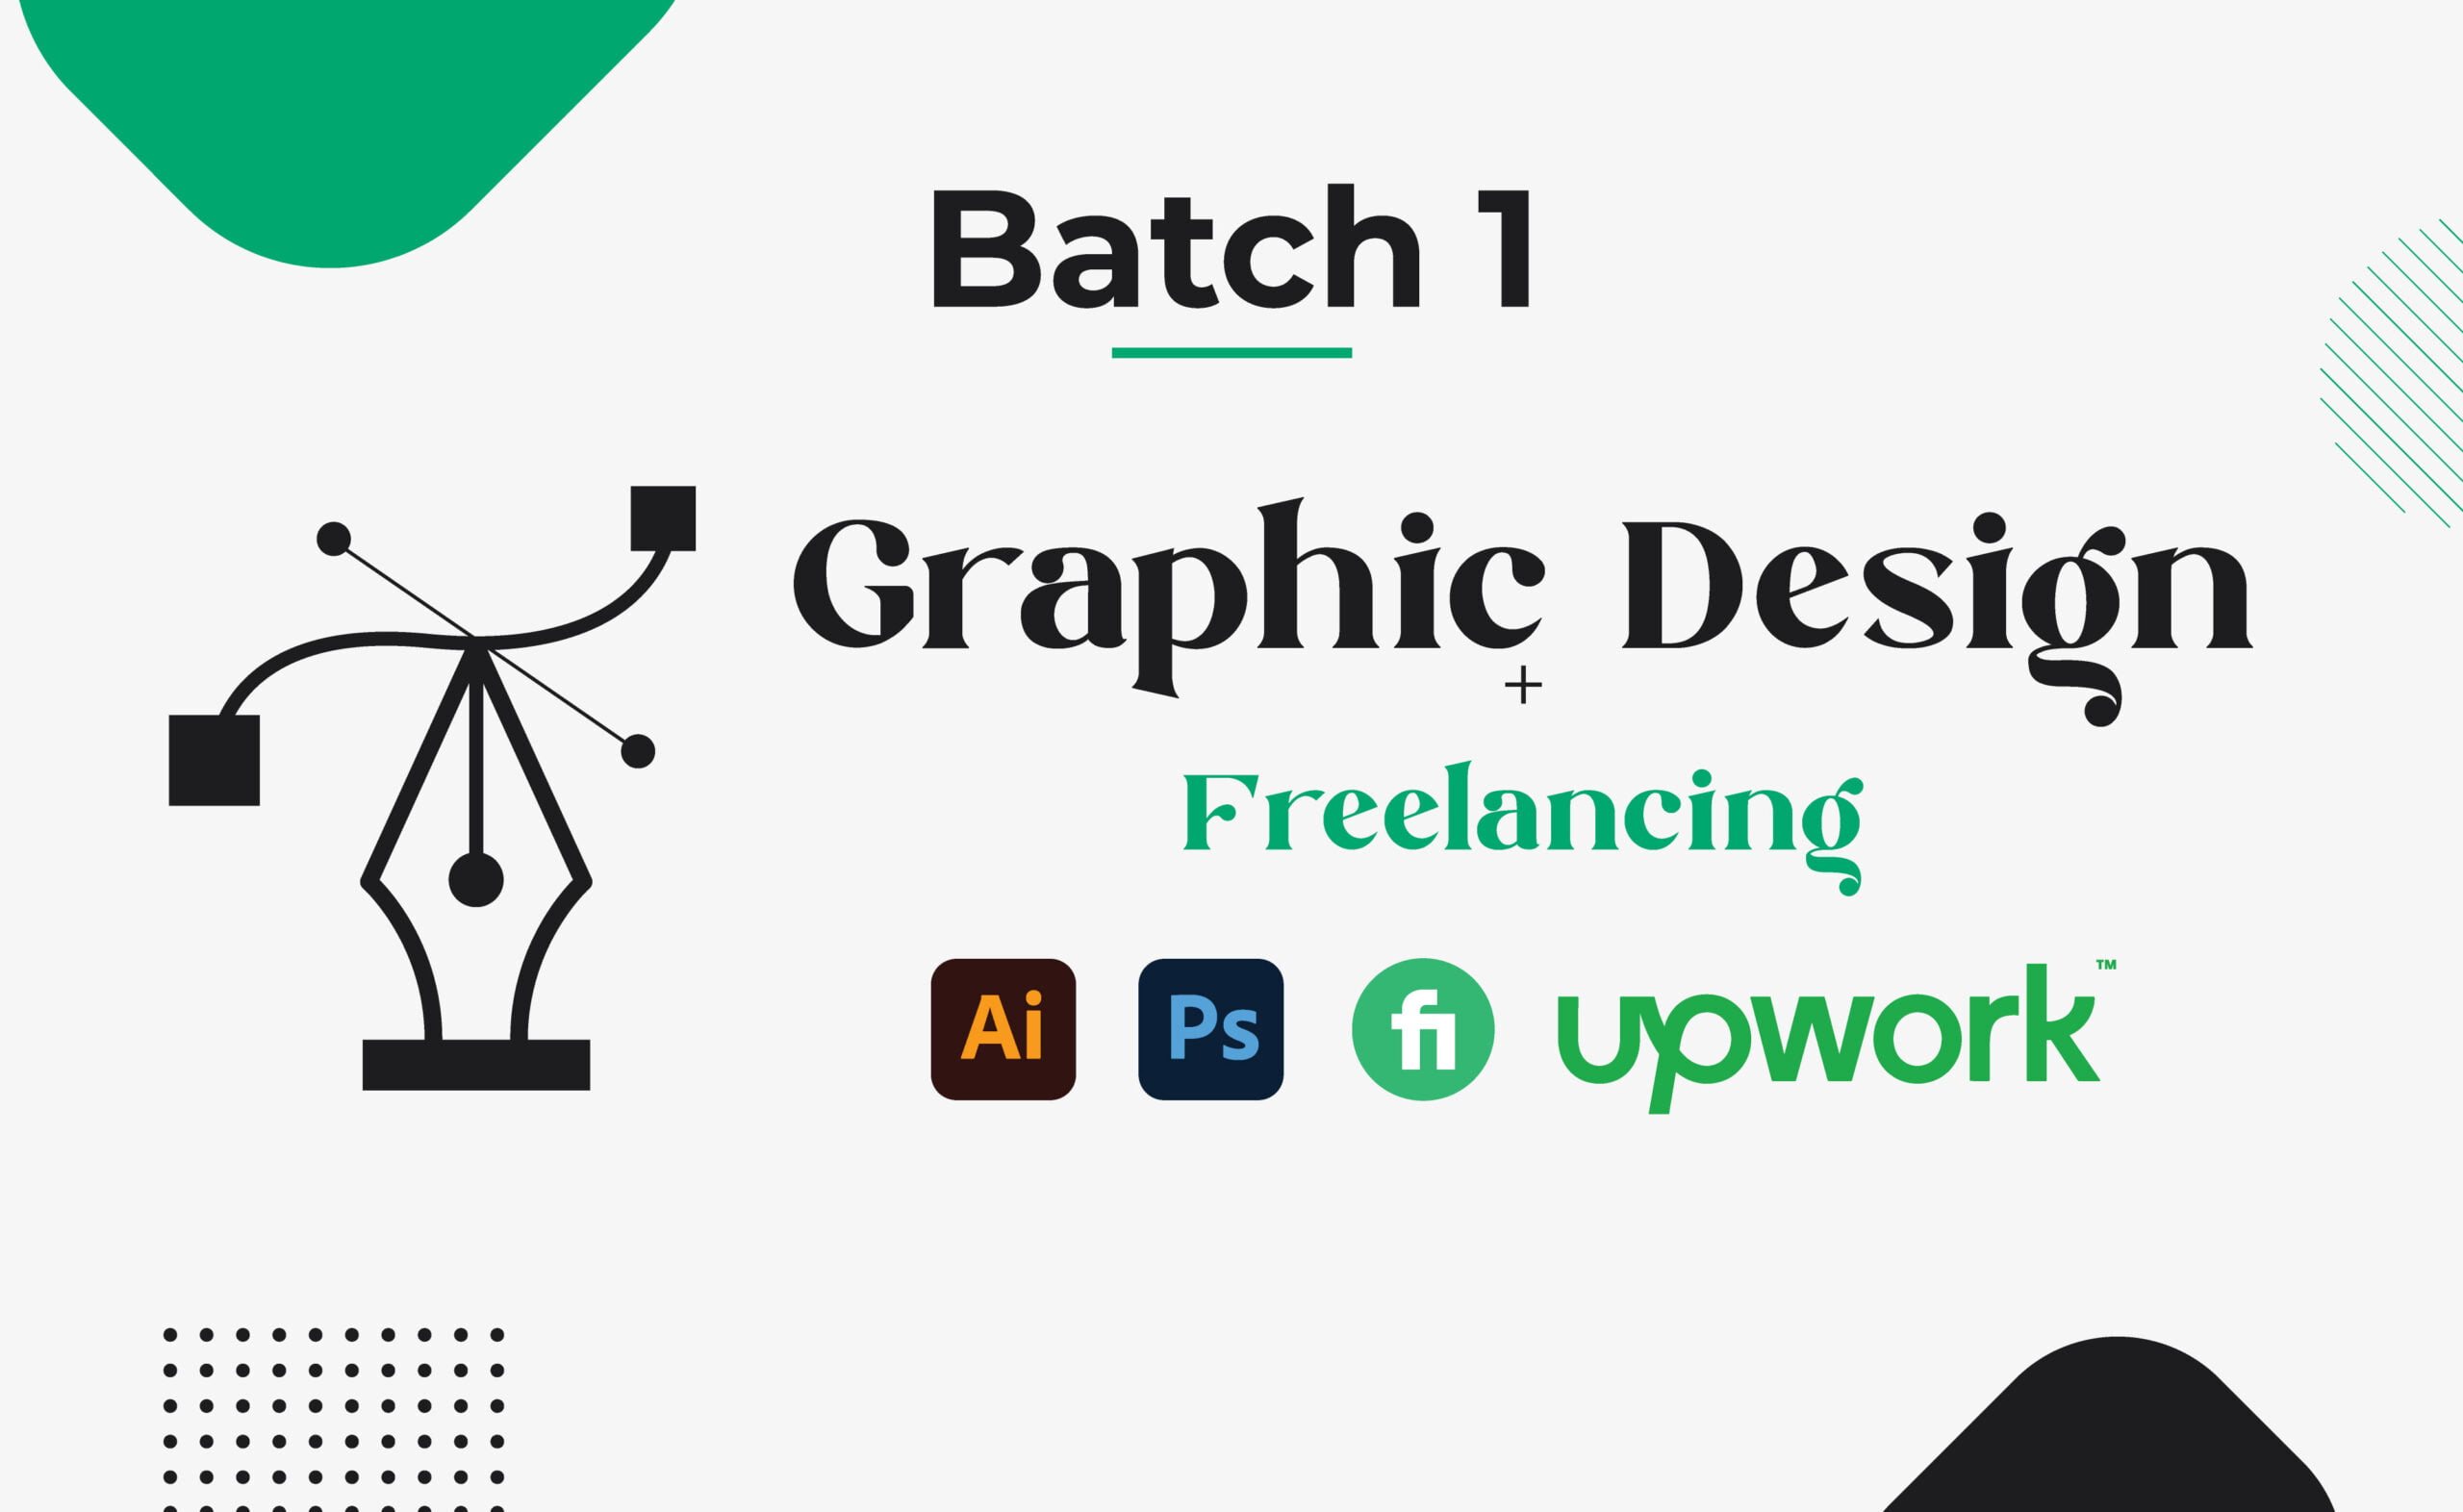 Batch 1: Graphic Design + Freelancing